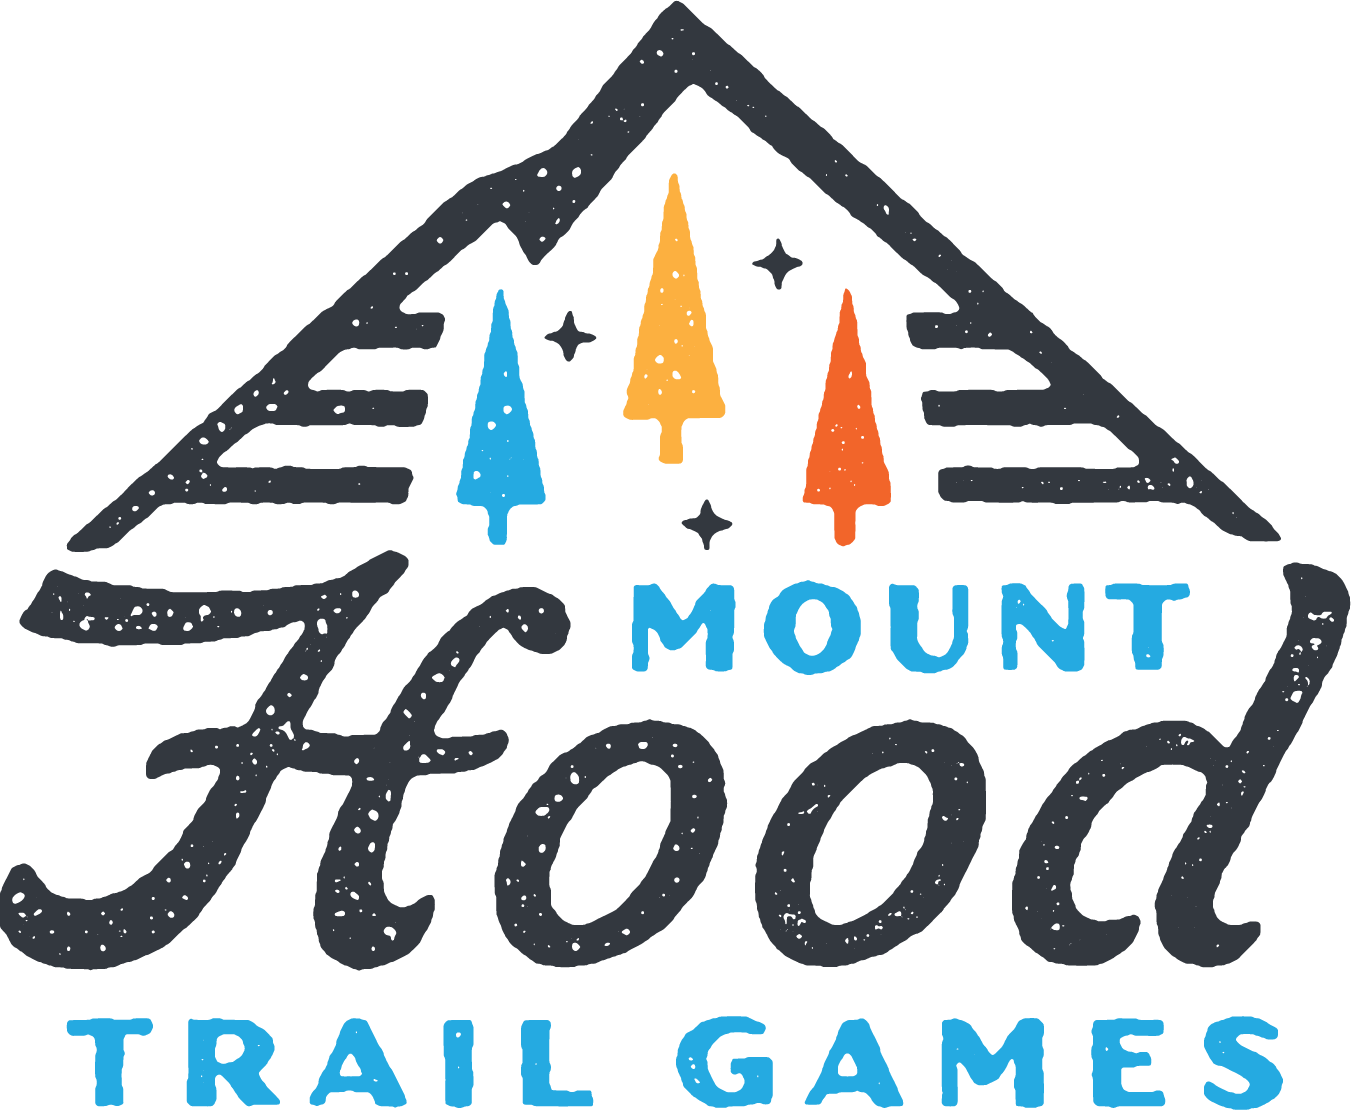 Mt. Hood Trail Games logo on RaceRaves